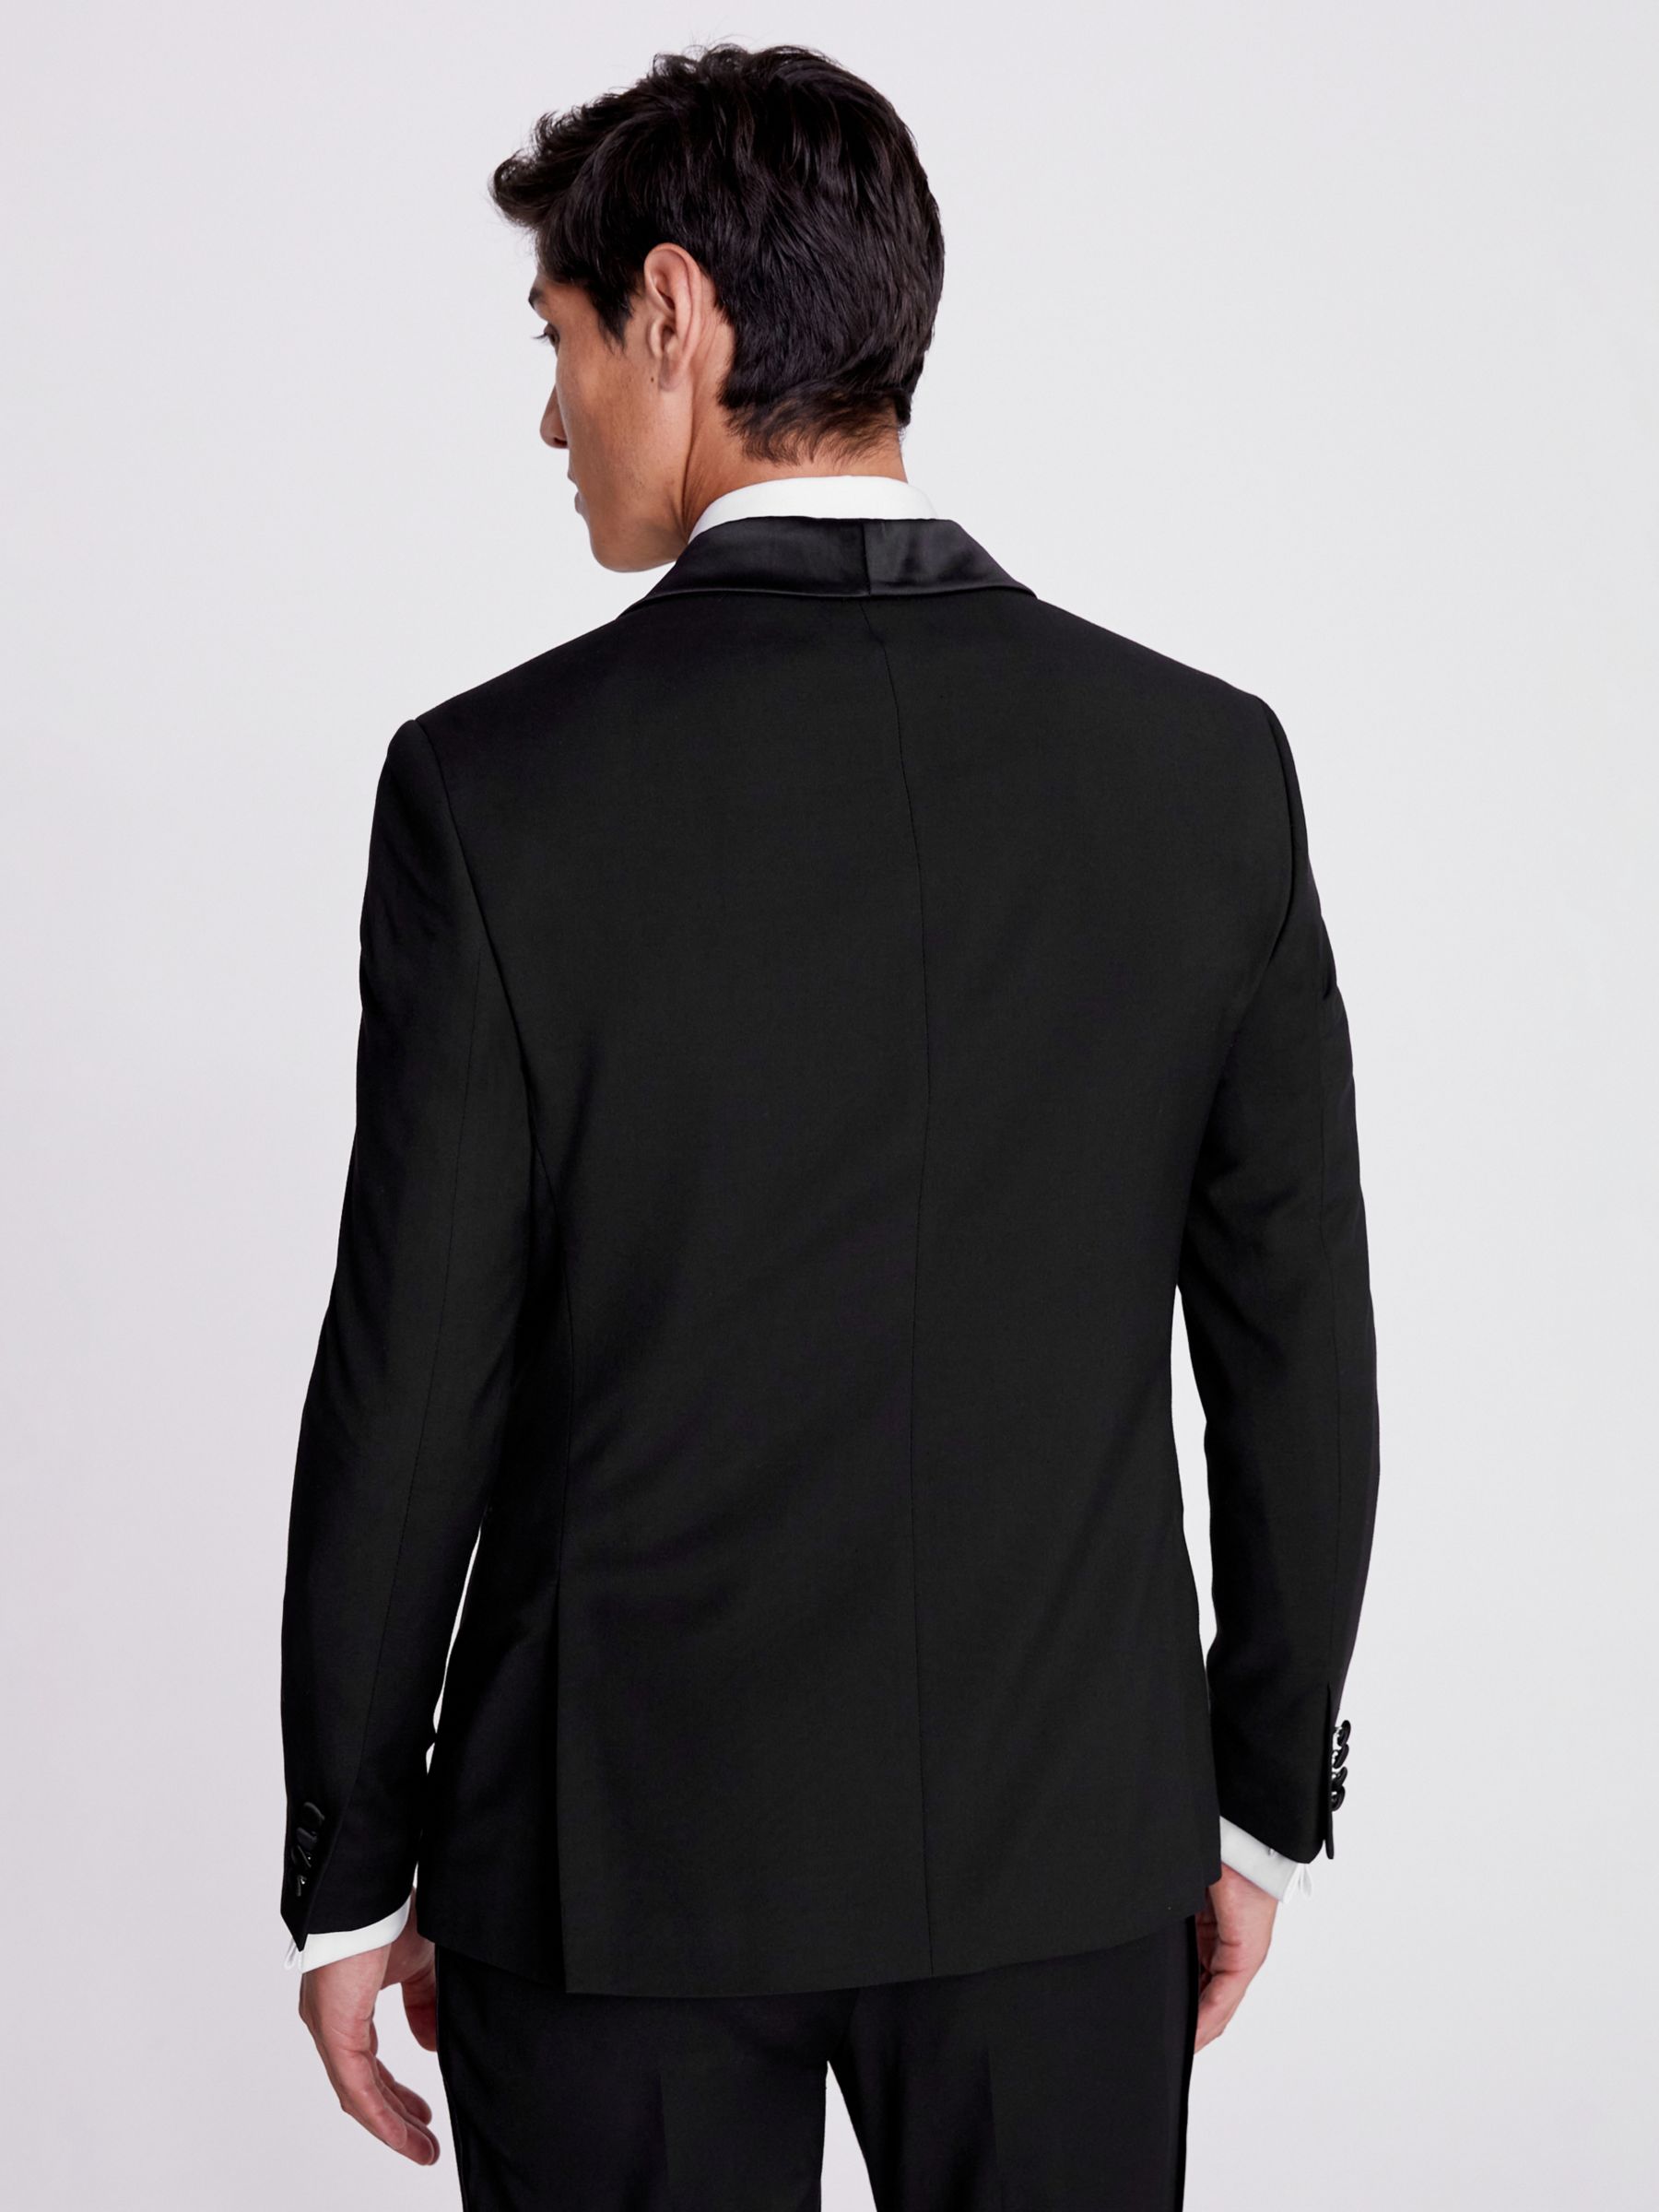 Moss Slim Fit Tuxedo Jacket, Black, 34S